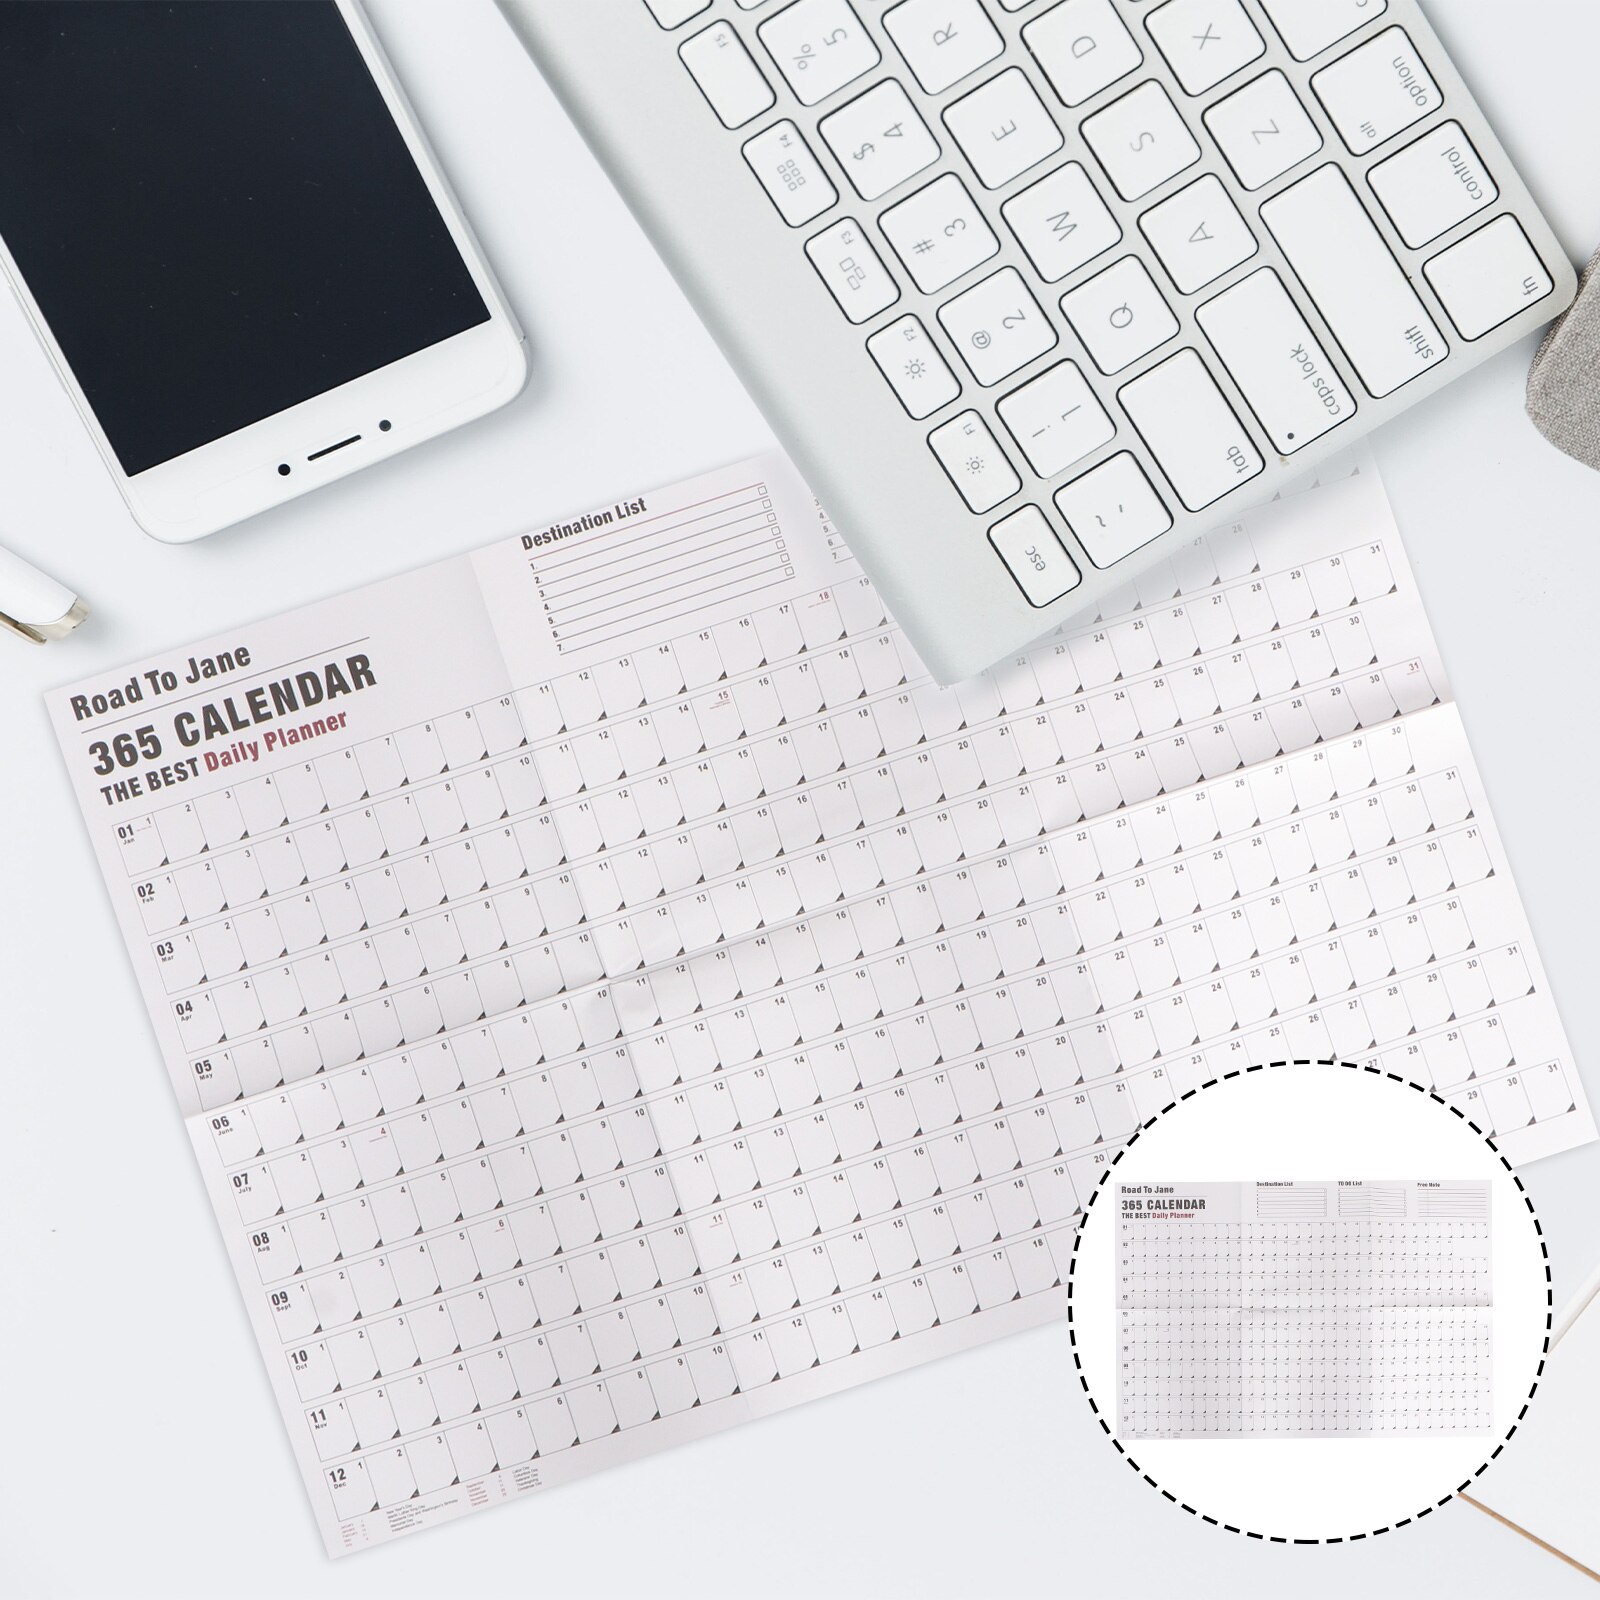 Calendar Schedule Desktop Calendar English Annual Planner Simple Wall Calendar English Schedule for Home Office